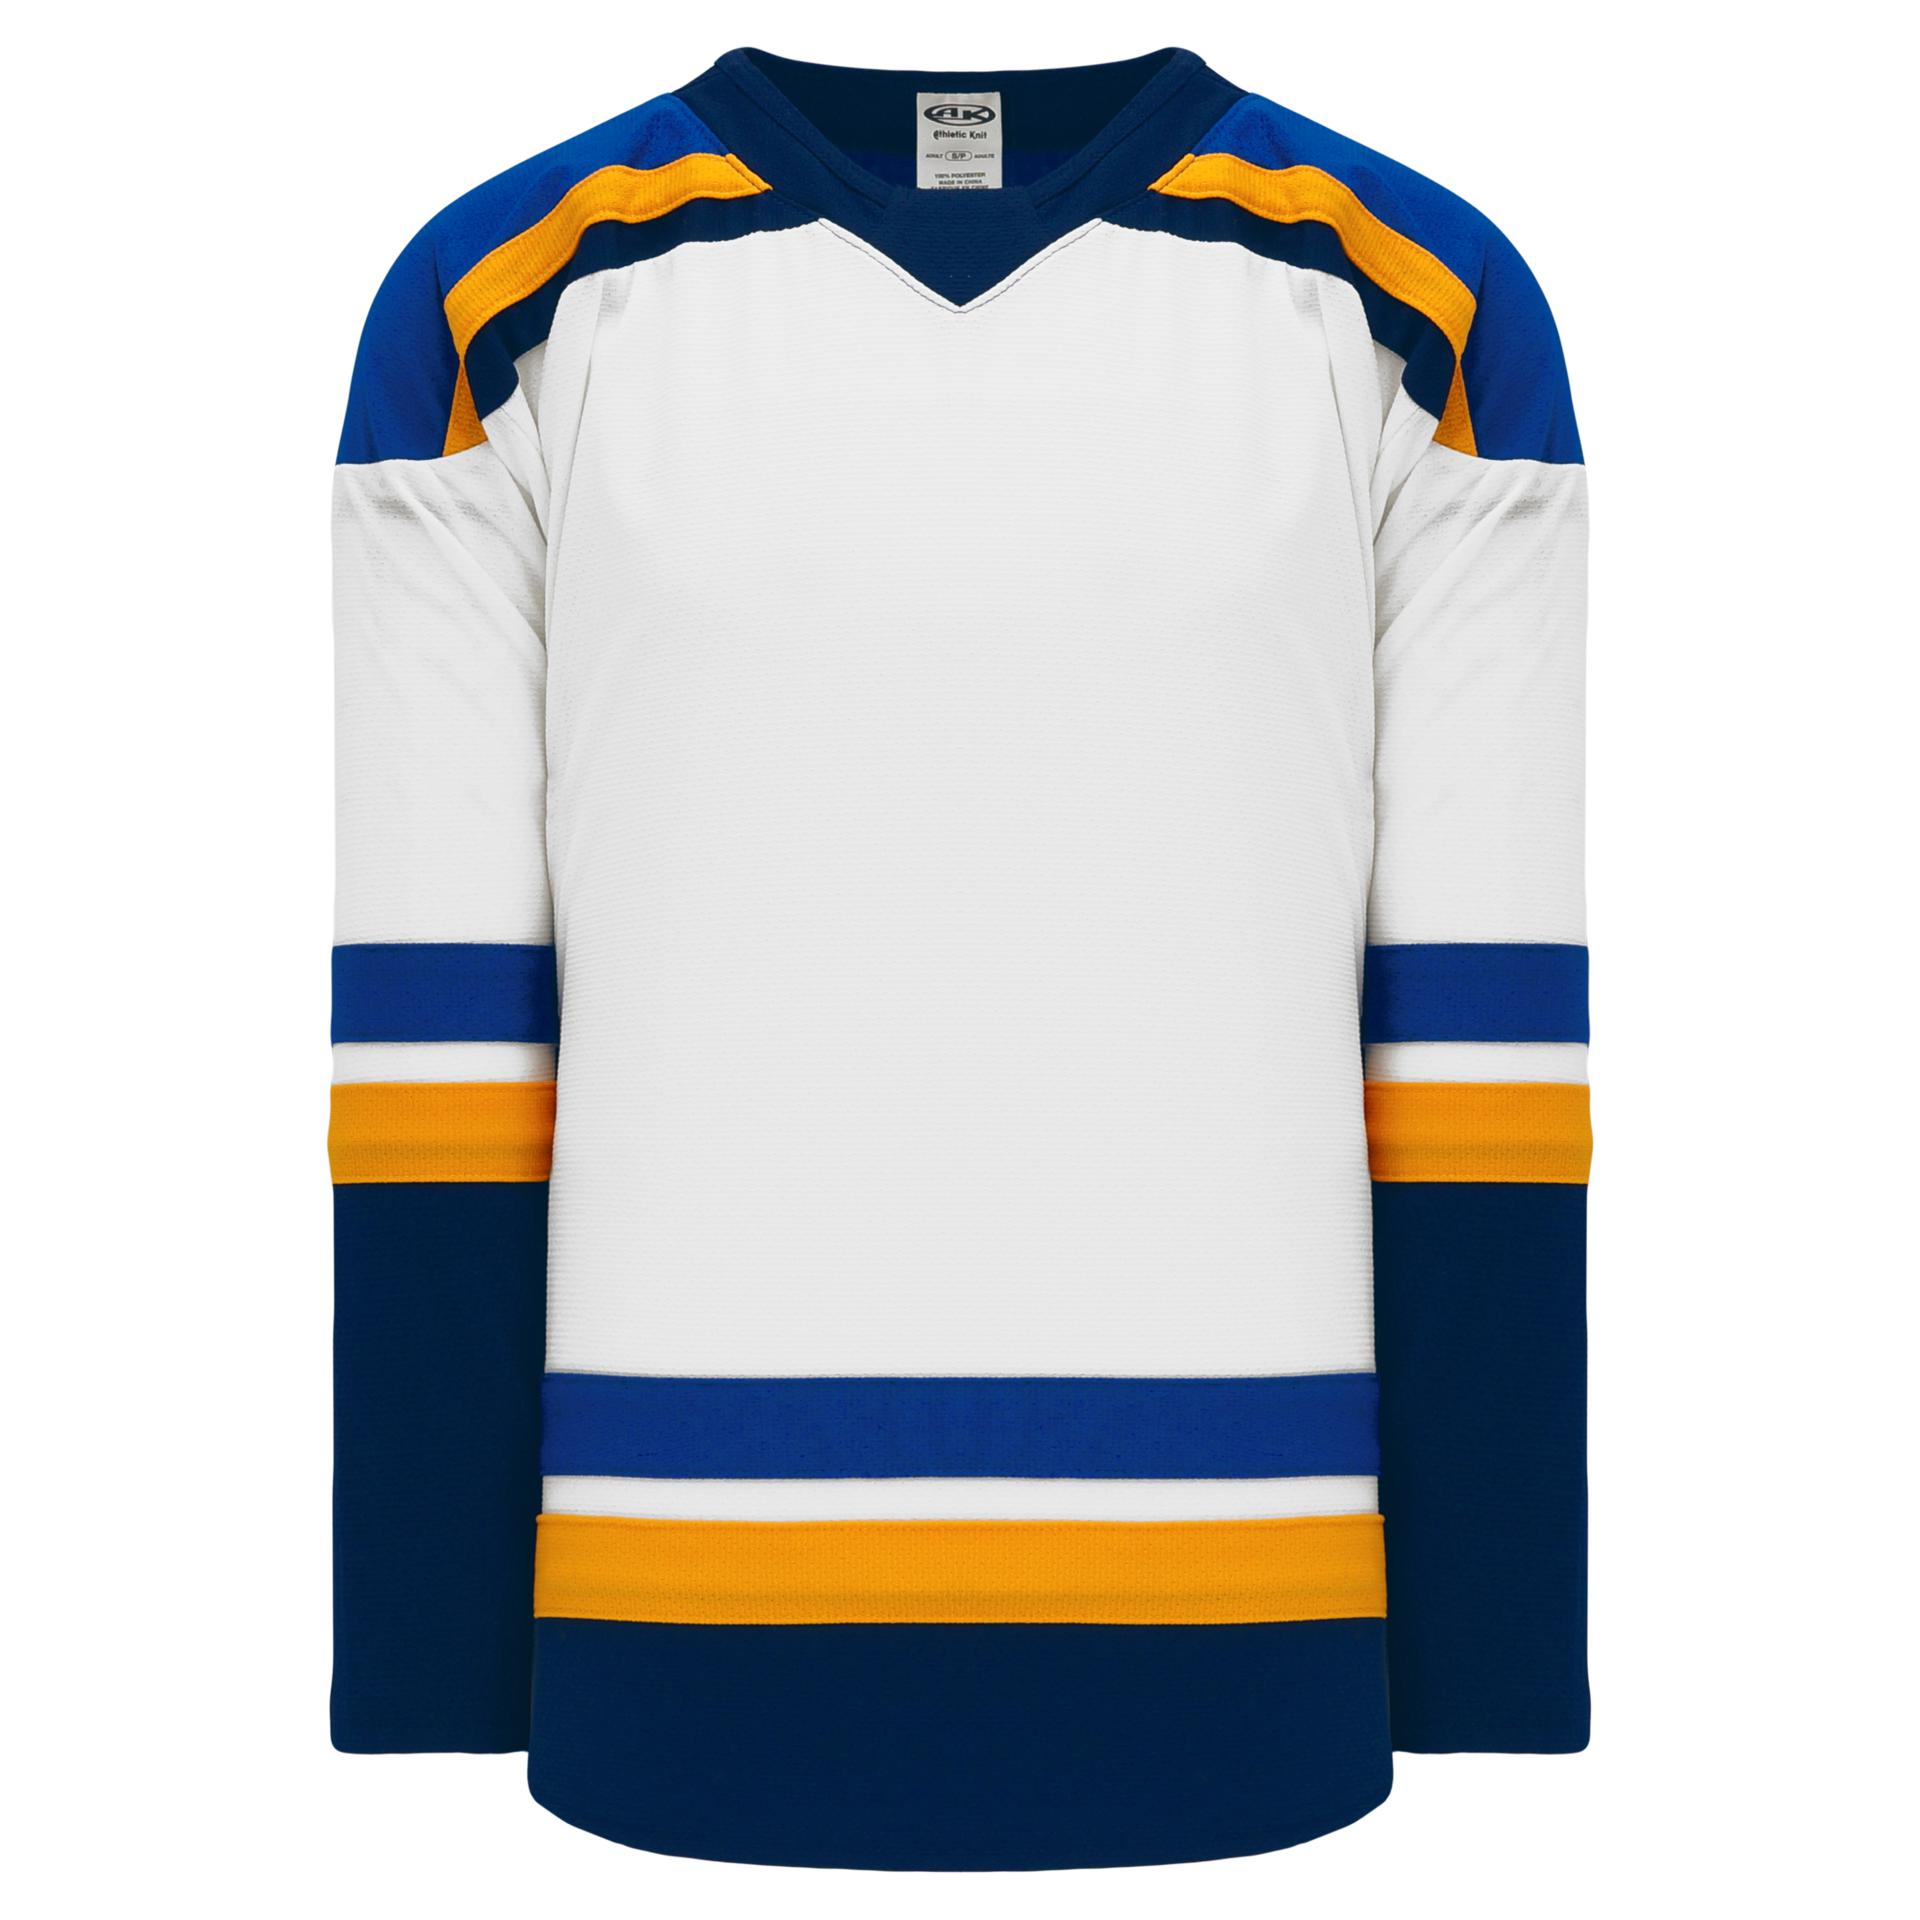 Saint Louis Blues NHL Sweatshirt - Medium